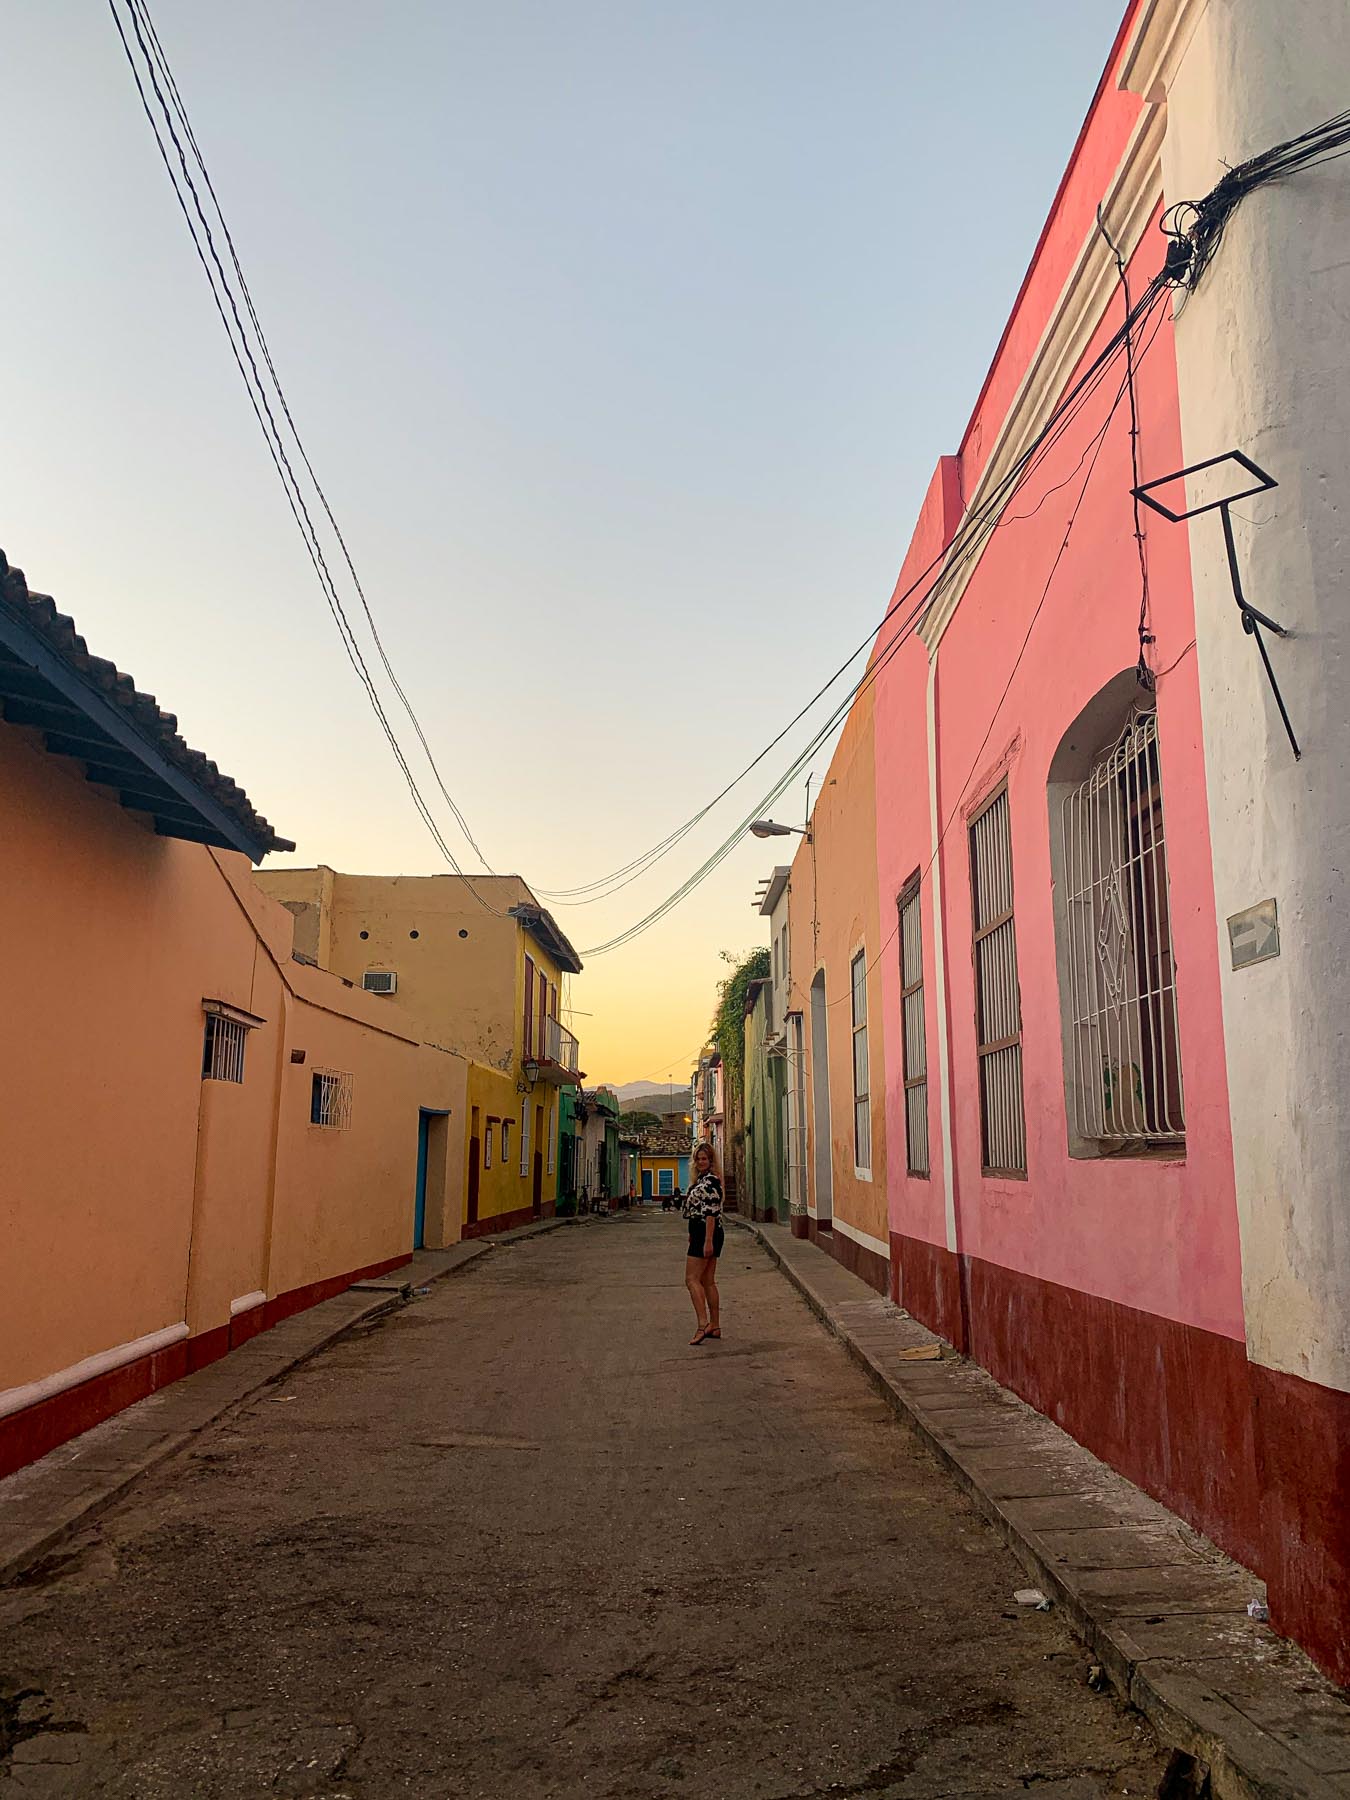 Narrow streets of Trinidad